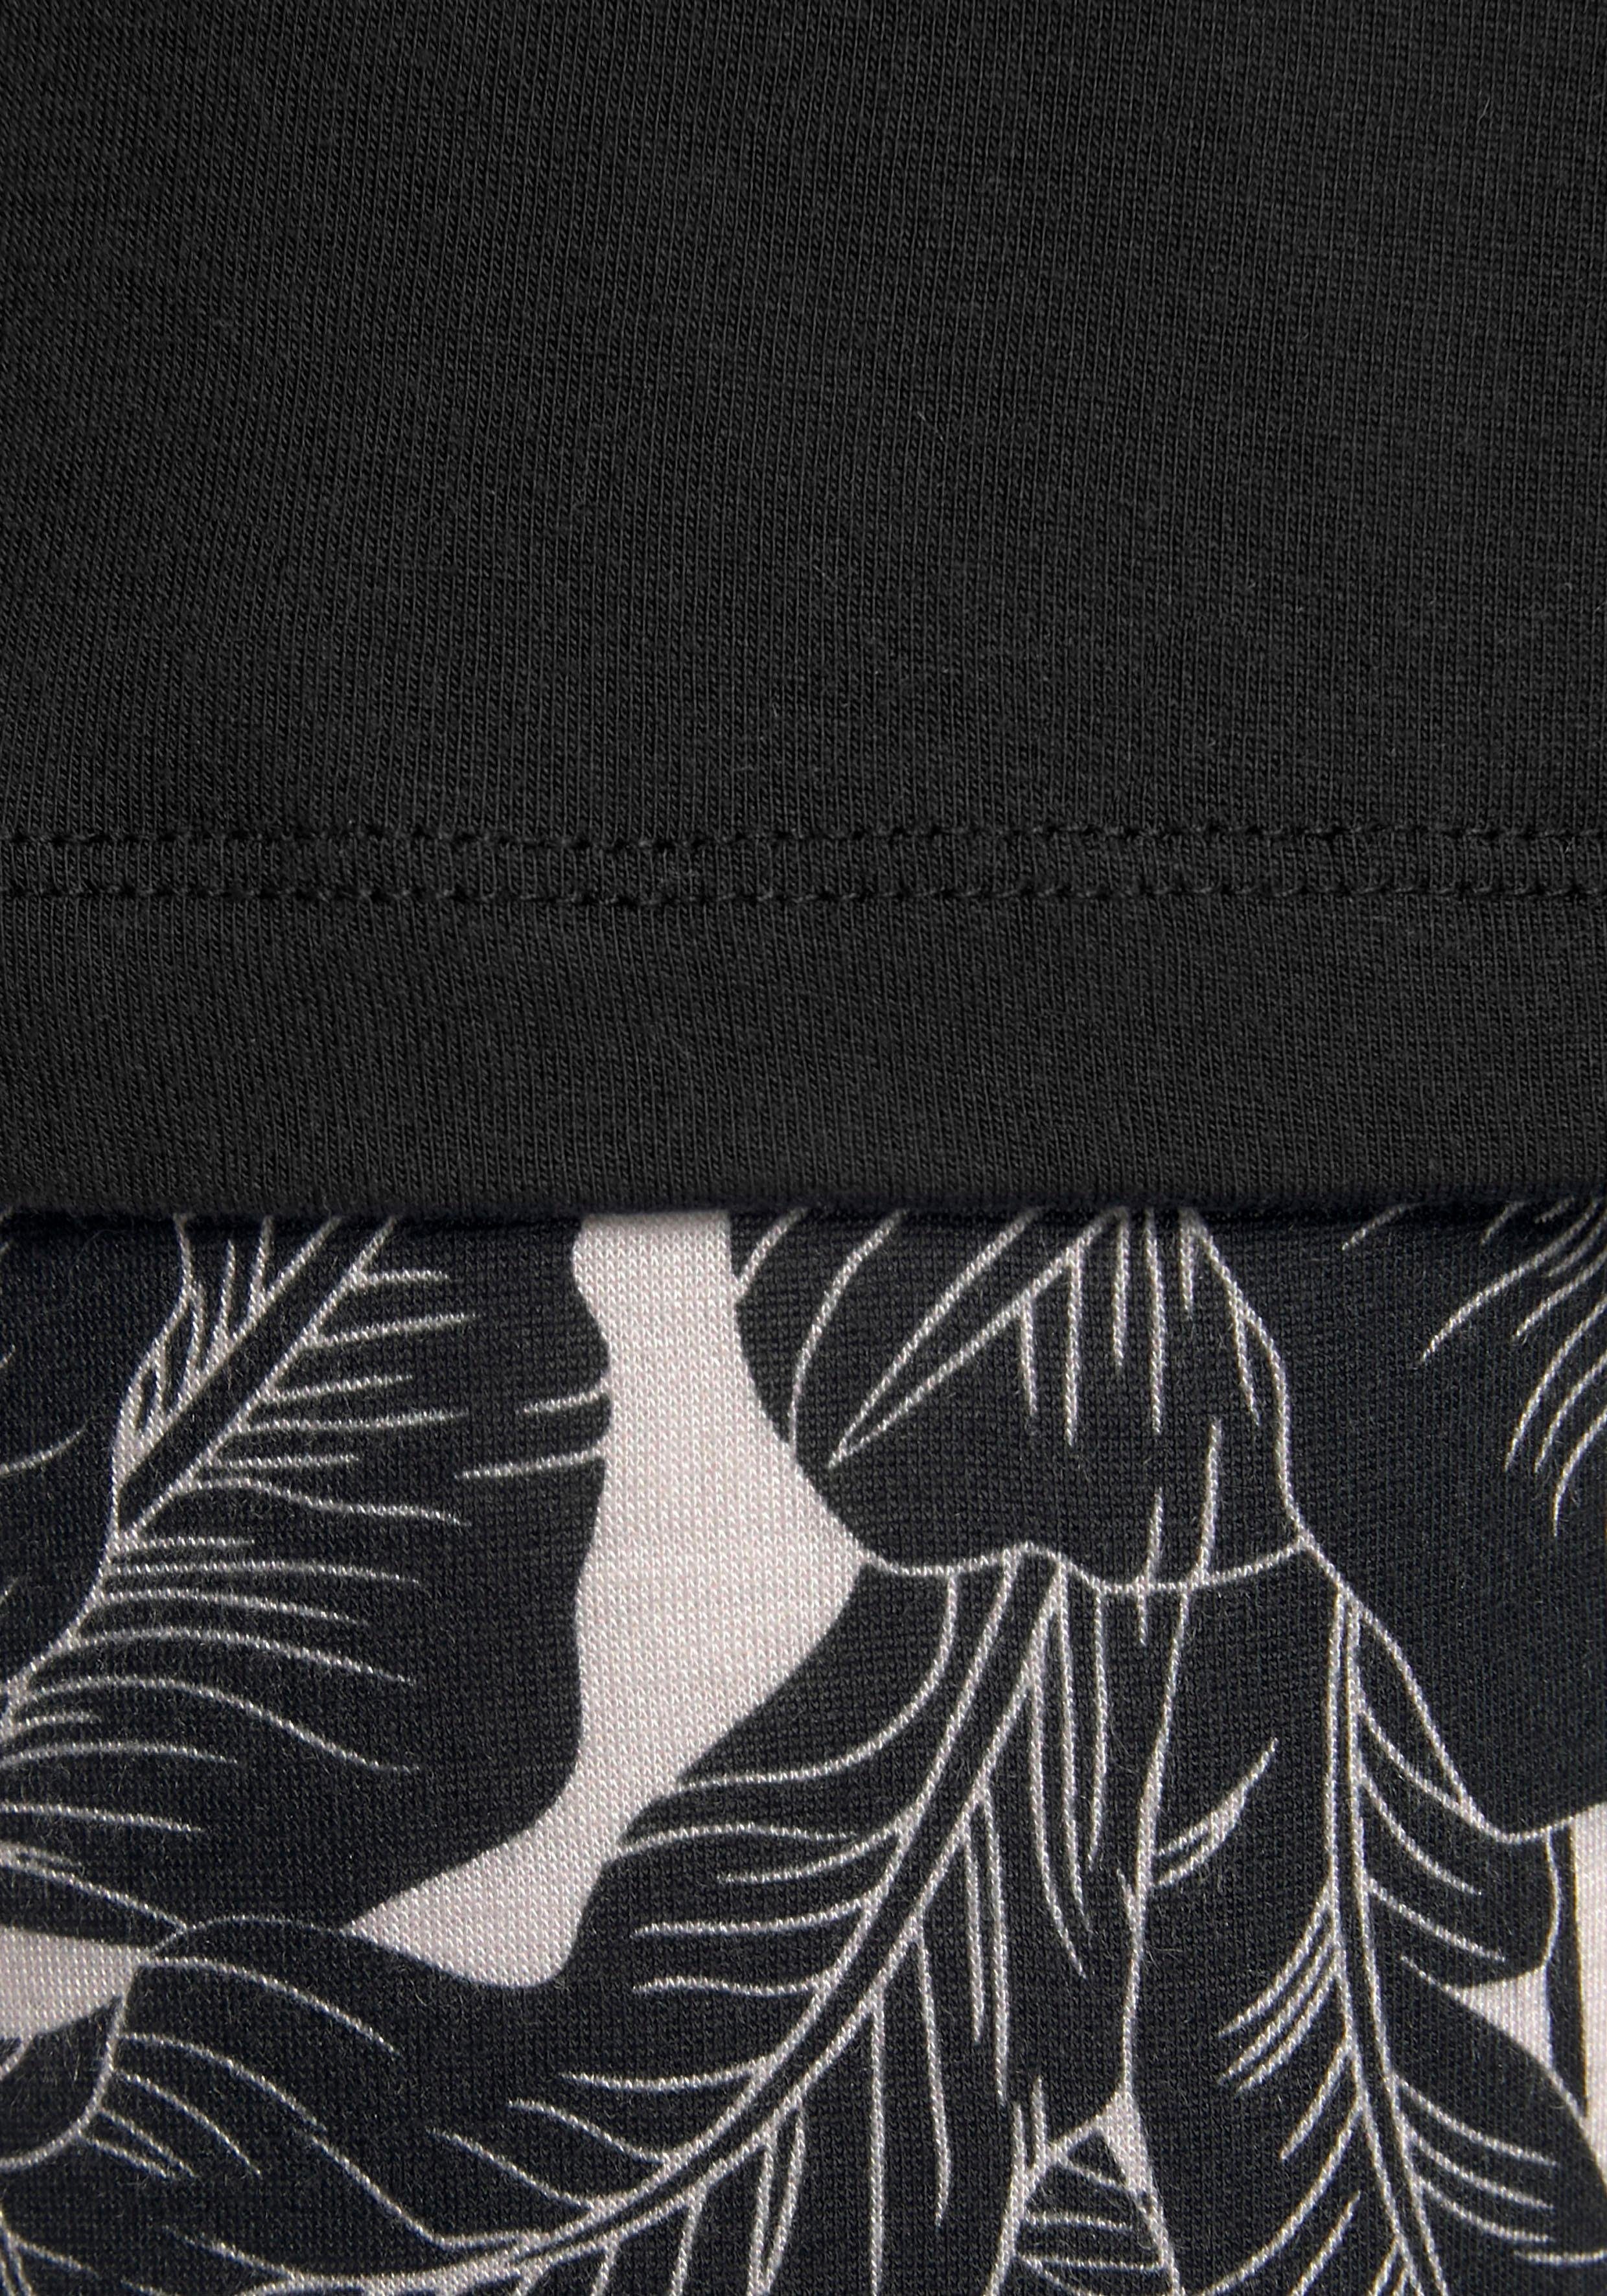 LASCANA Pyjama tlg., Leaf-Print mit (2 Stück) 1 schwarz-gemustert